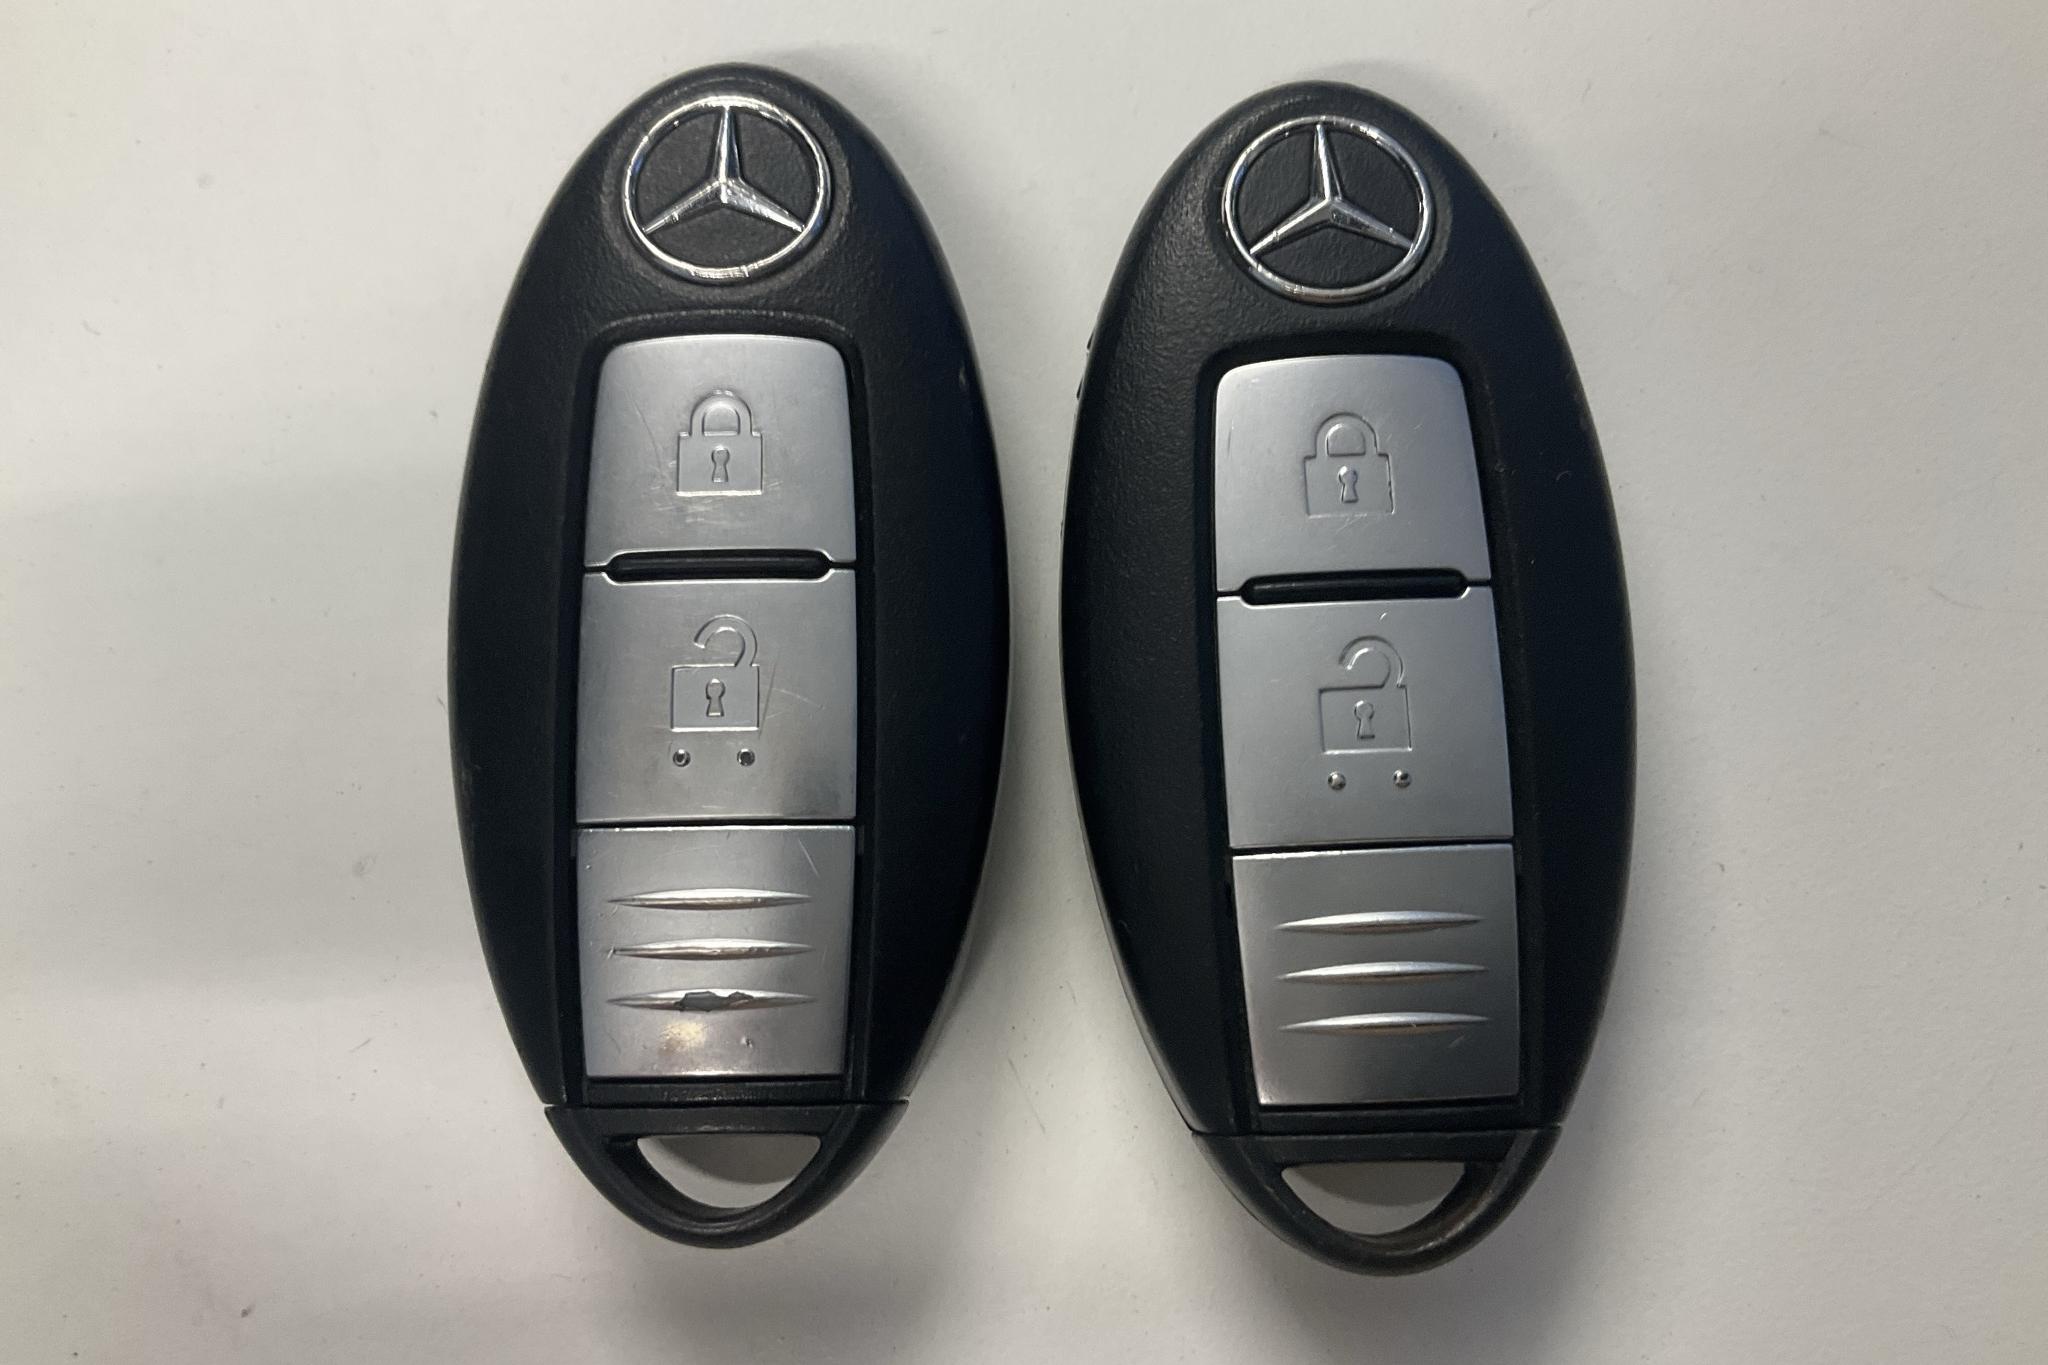 Mercedes X 350 d 4MATIC (258hk) - 149 430 km - Automatic - white - 2019